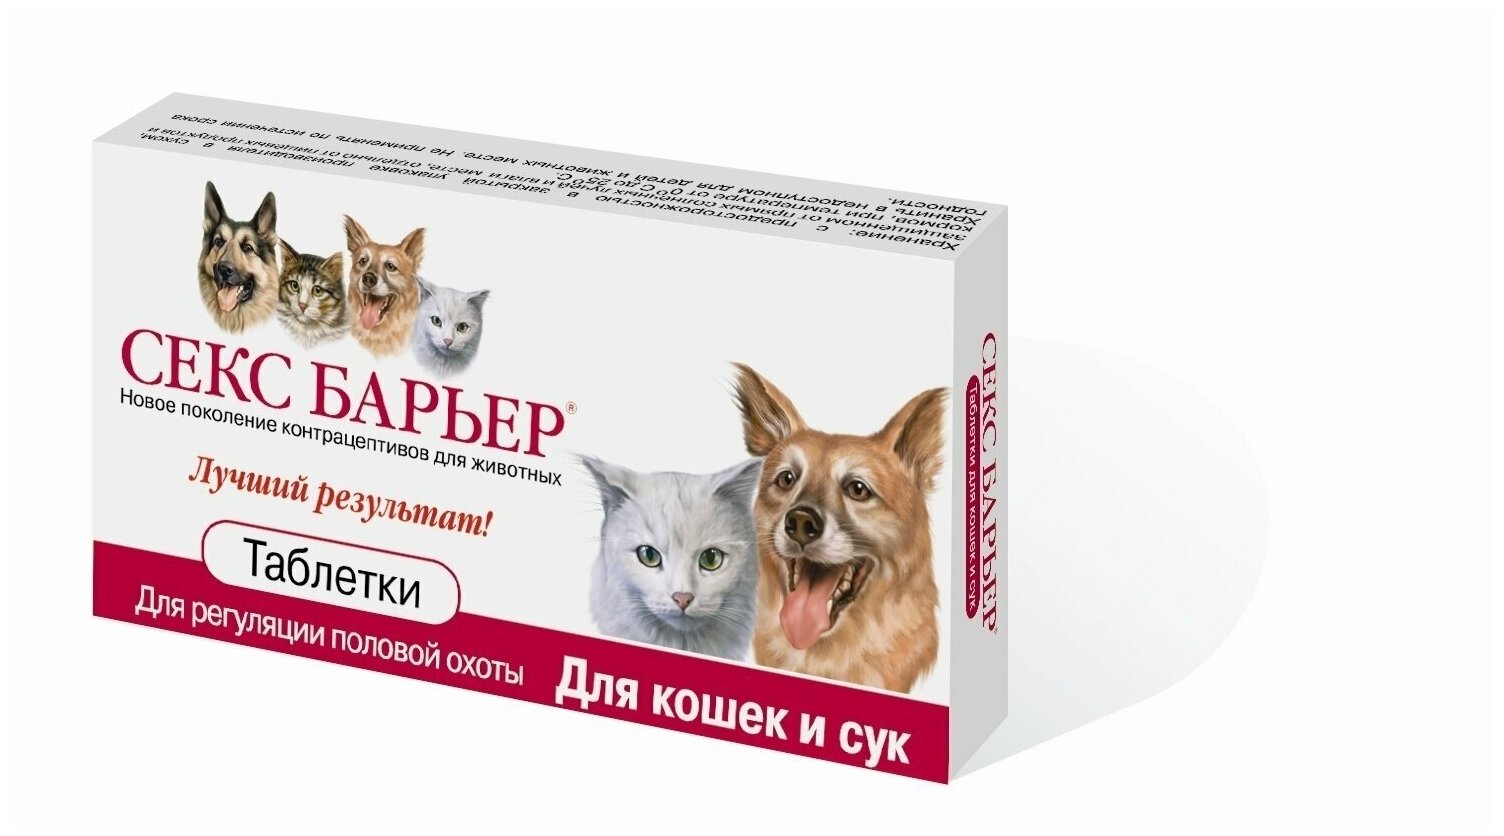 Секс Барьер таблетки для кошек и сук 10шт ООО "НВП "Астрафарм" - фото №2